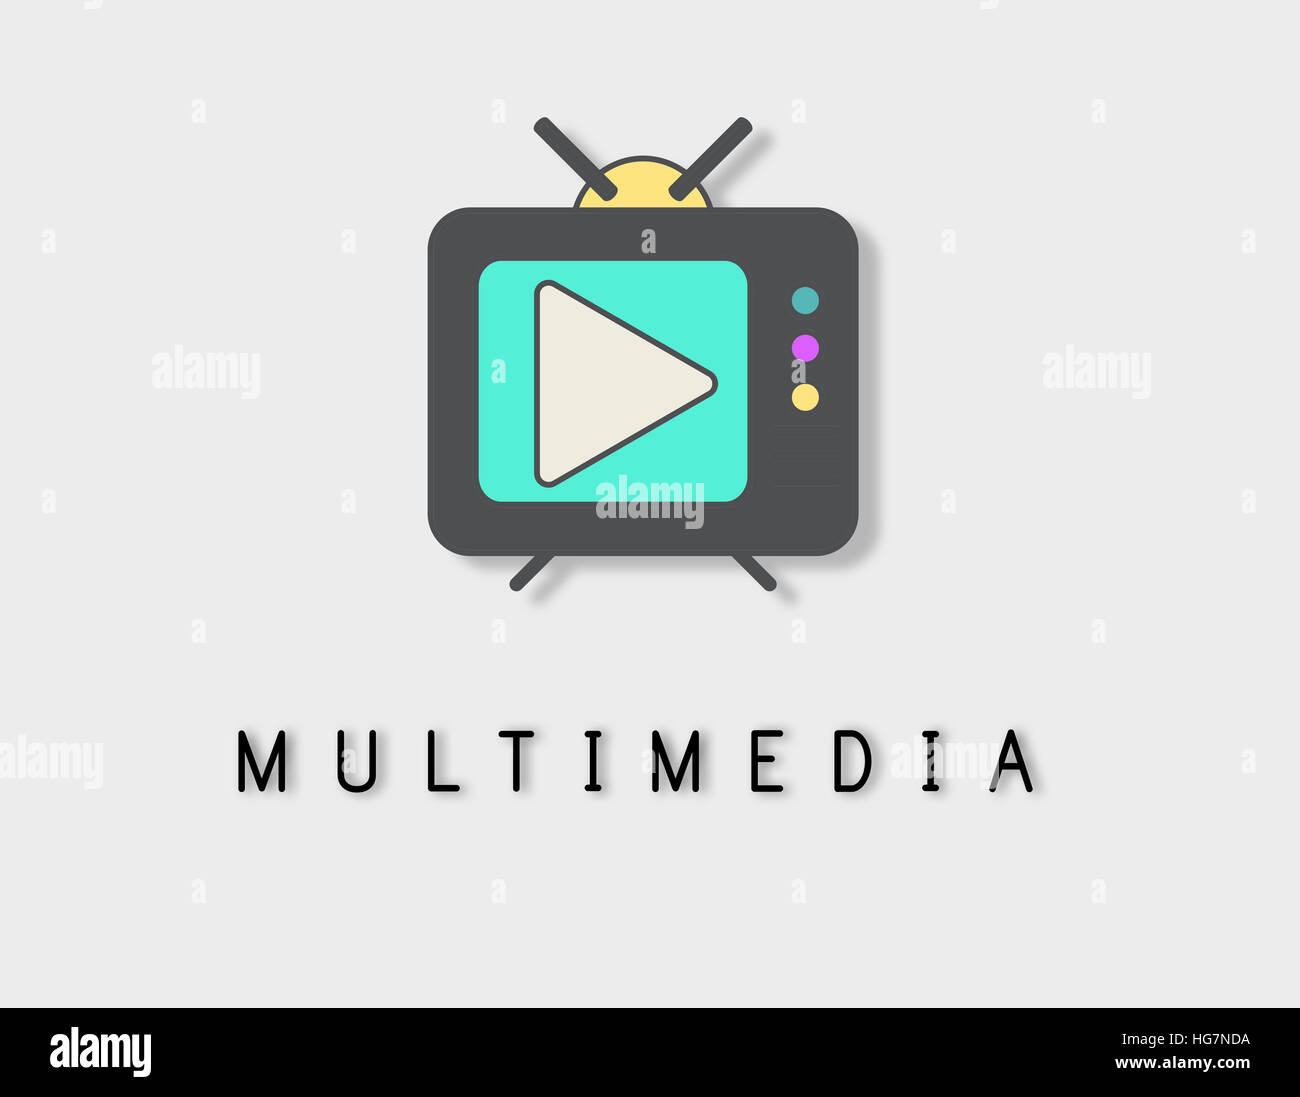 TV Play Button Media Entertainment Graphic Concept Stock Photo